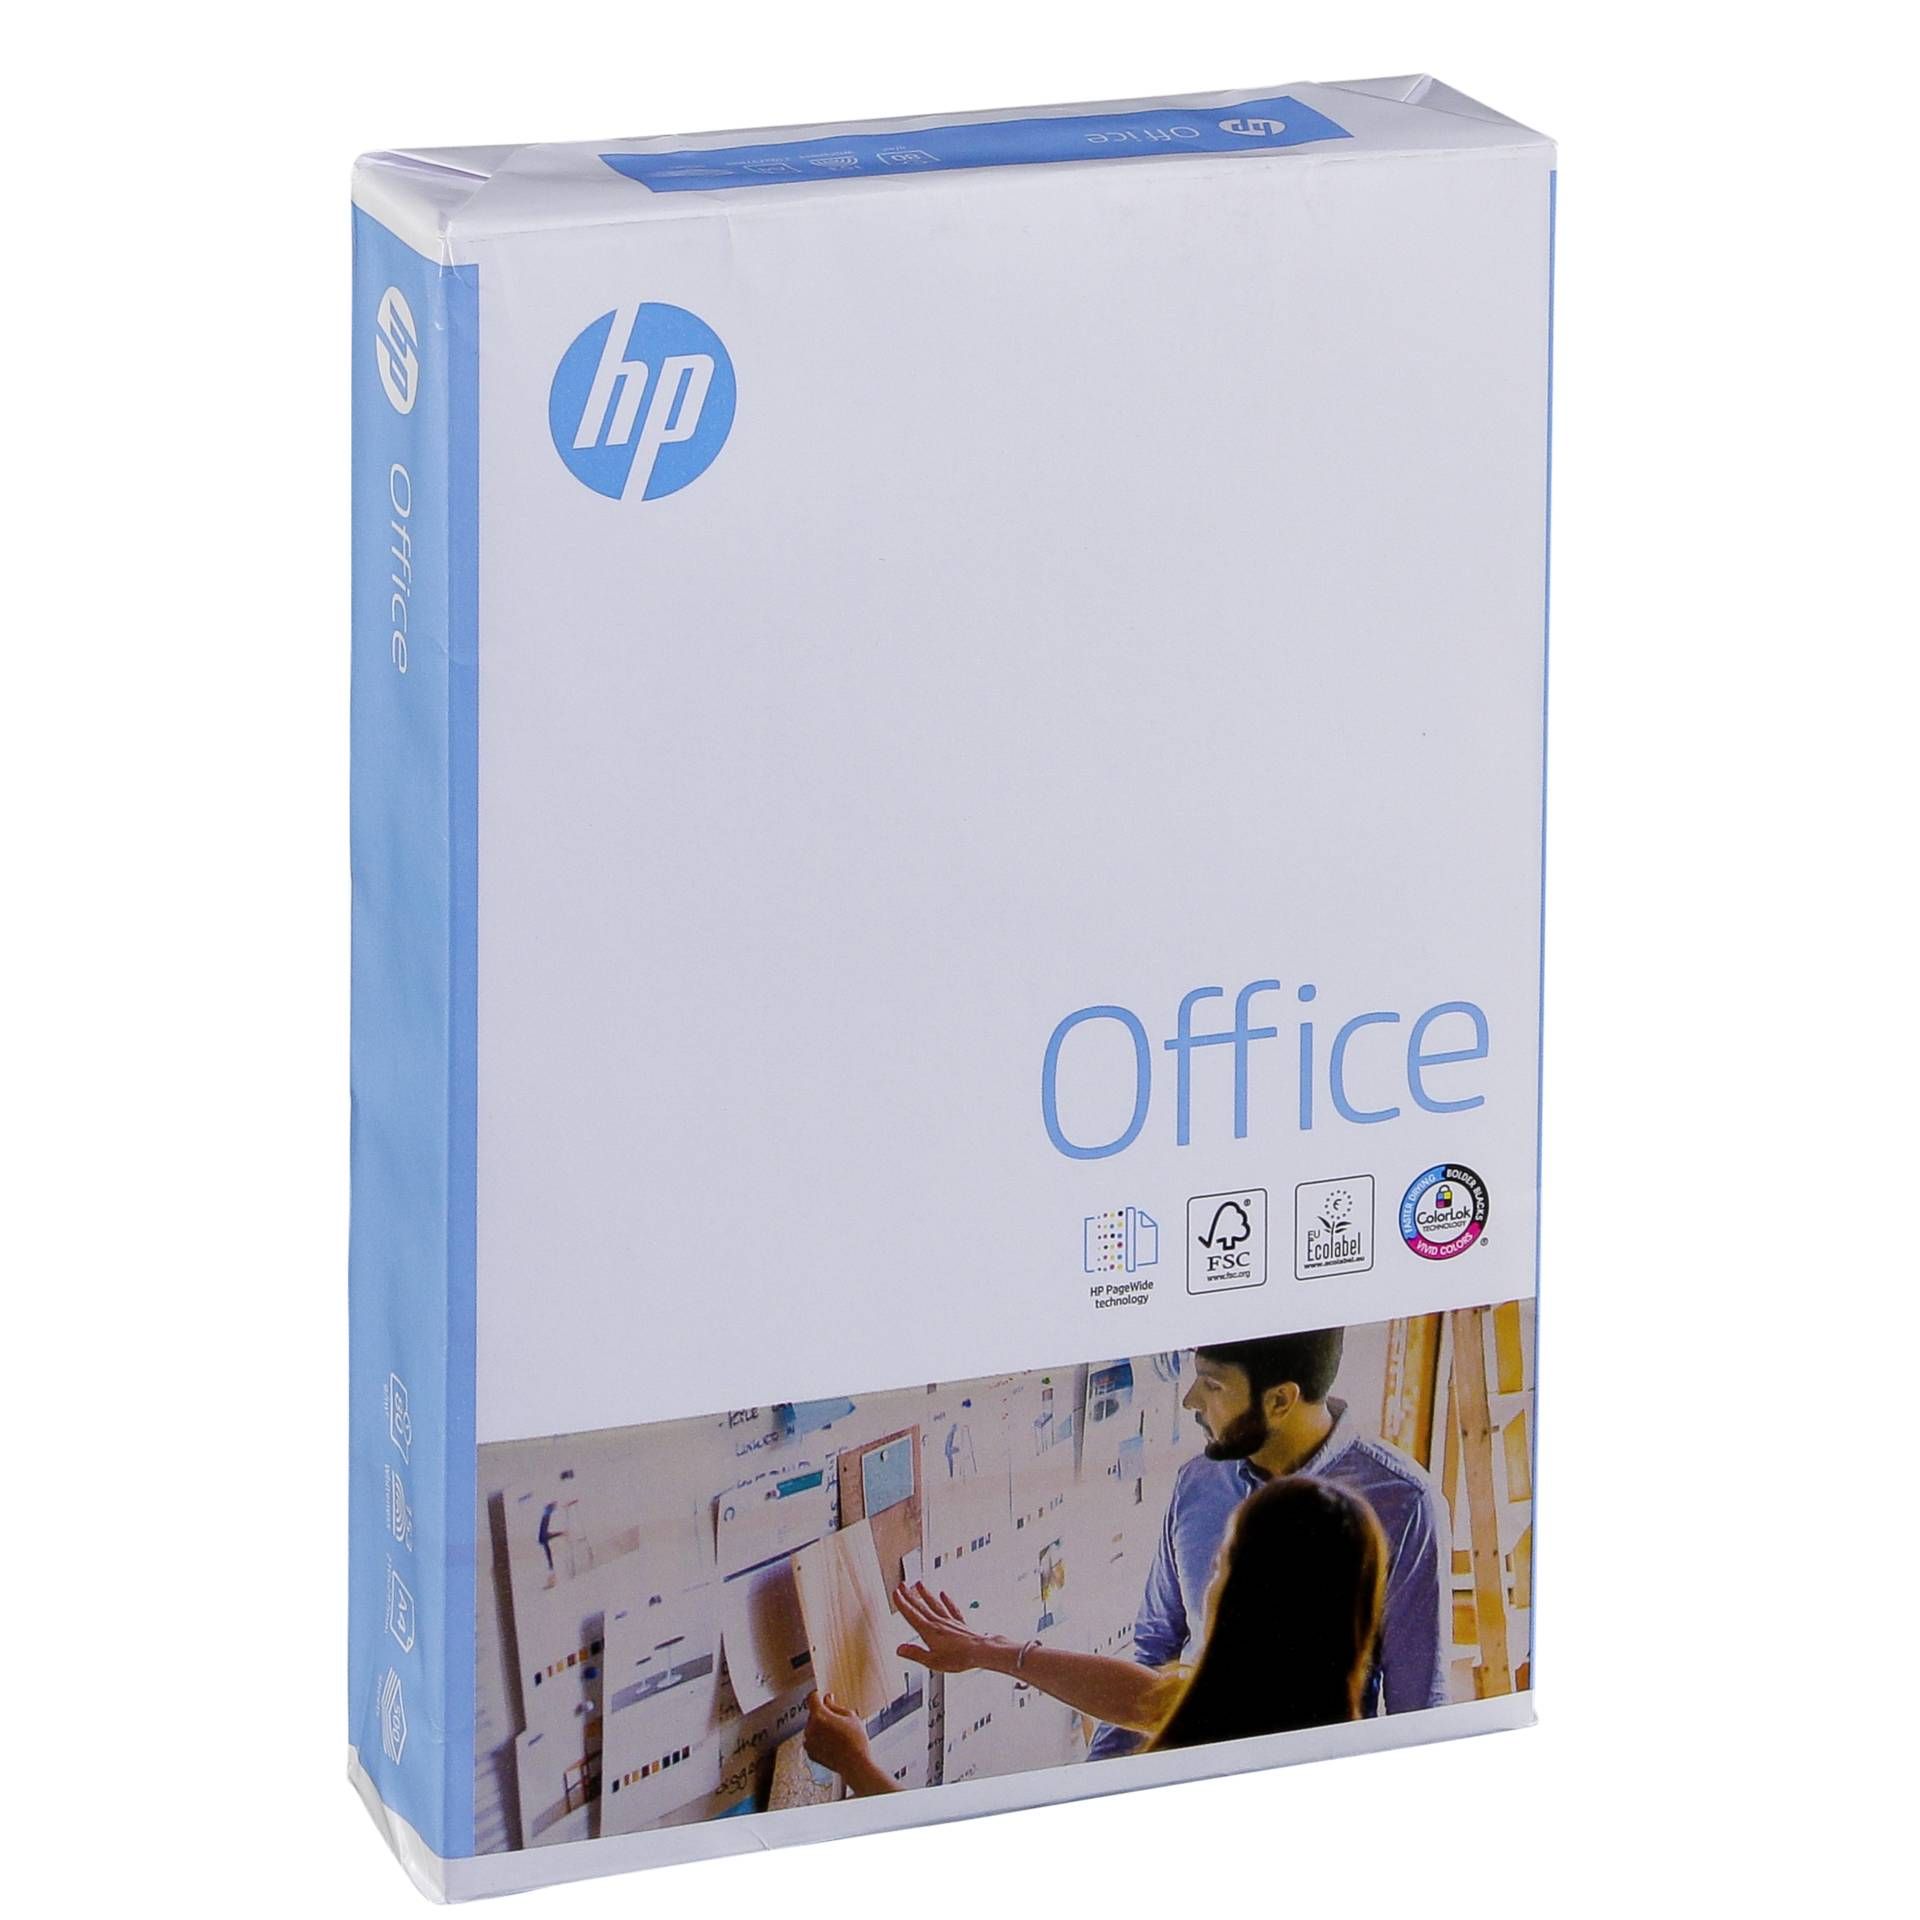 HP Office bianco CHP 110 A 4, 80 g, 500 fogli